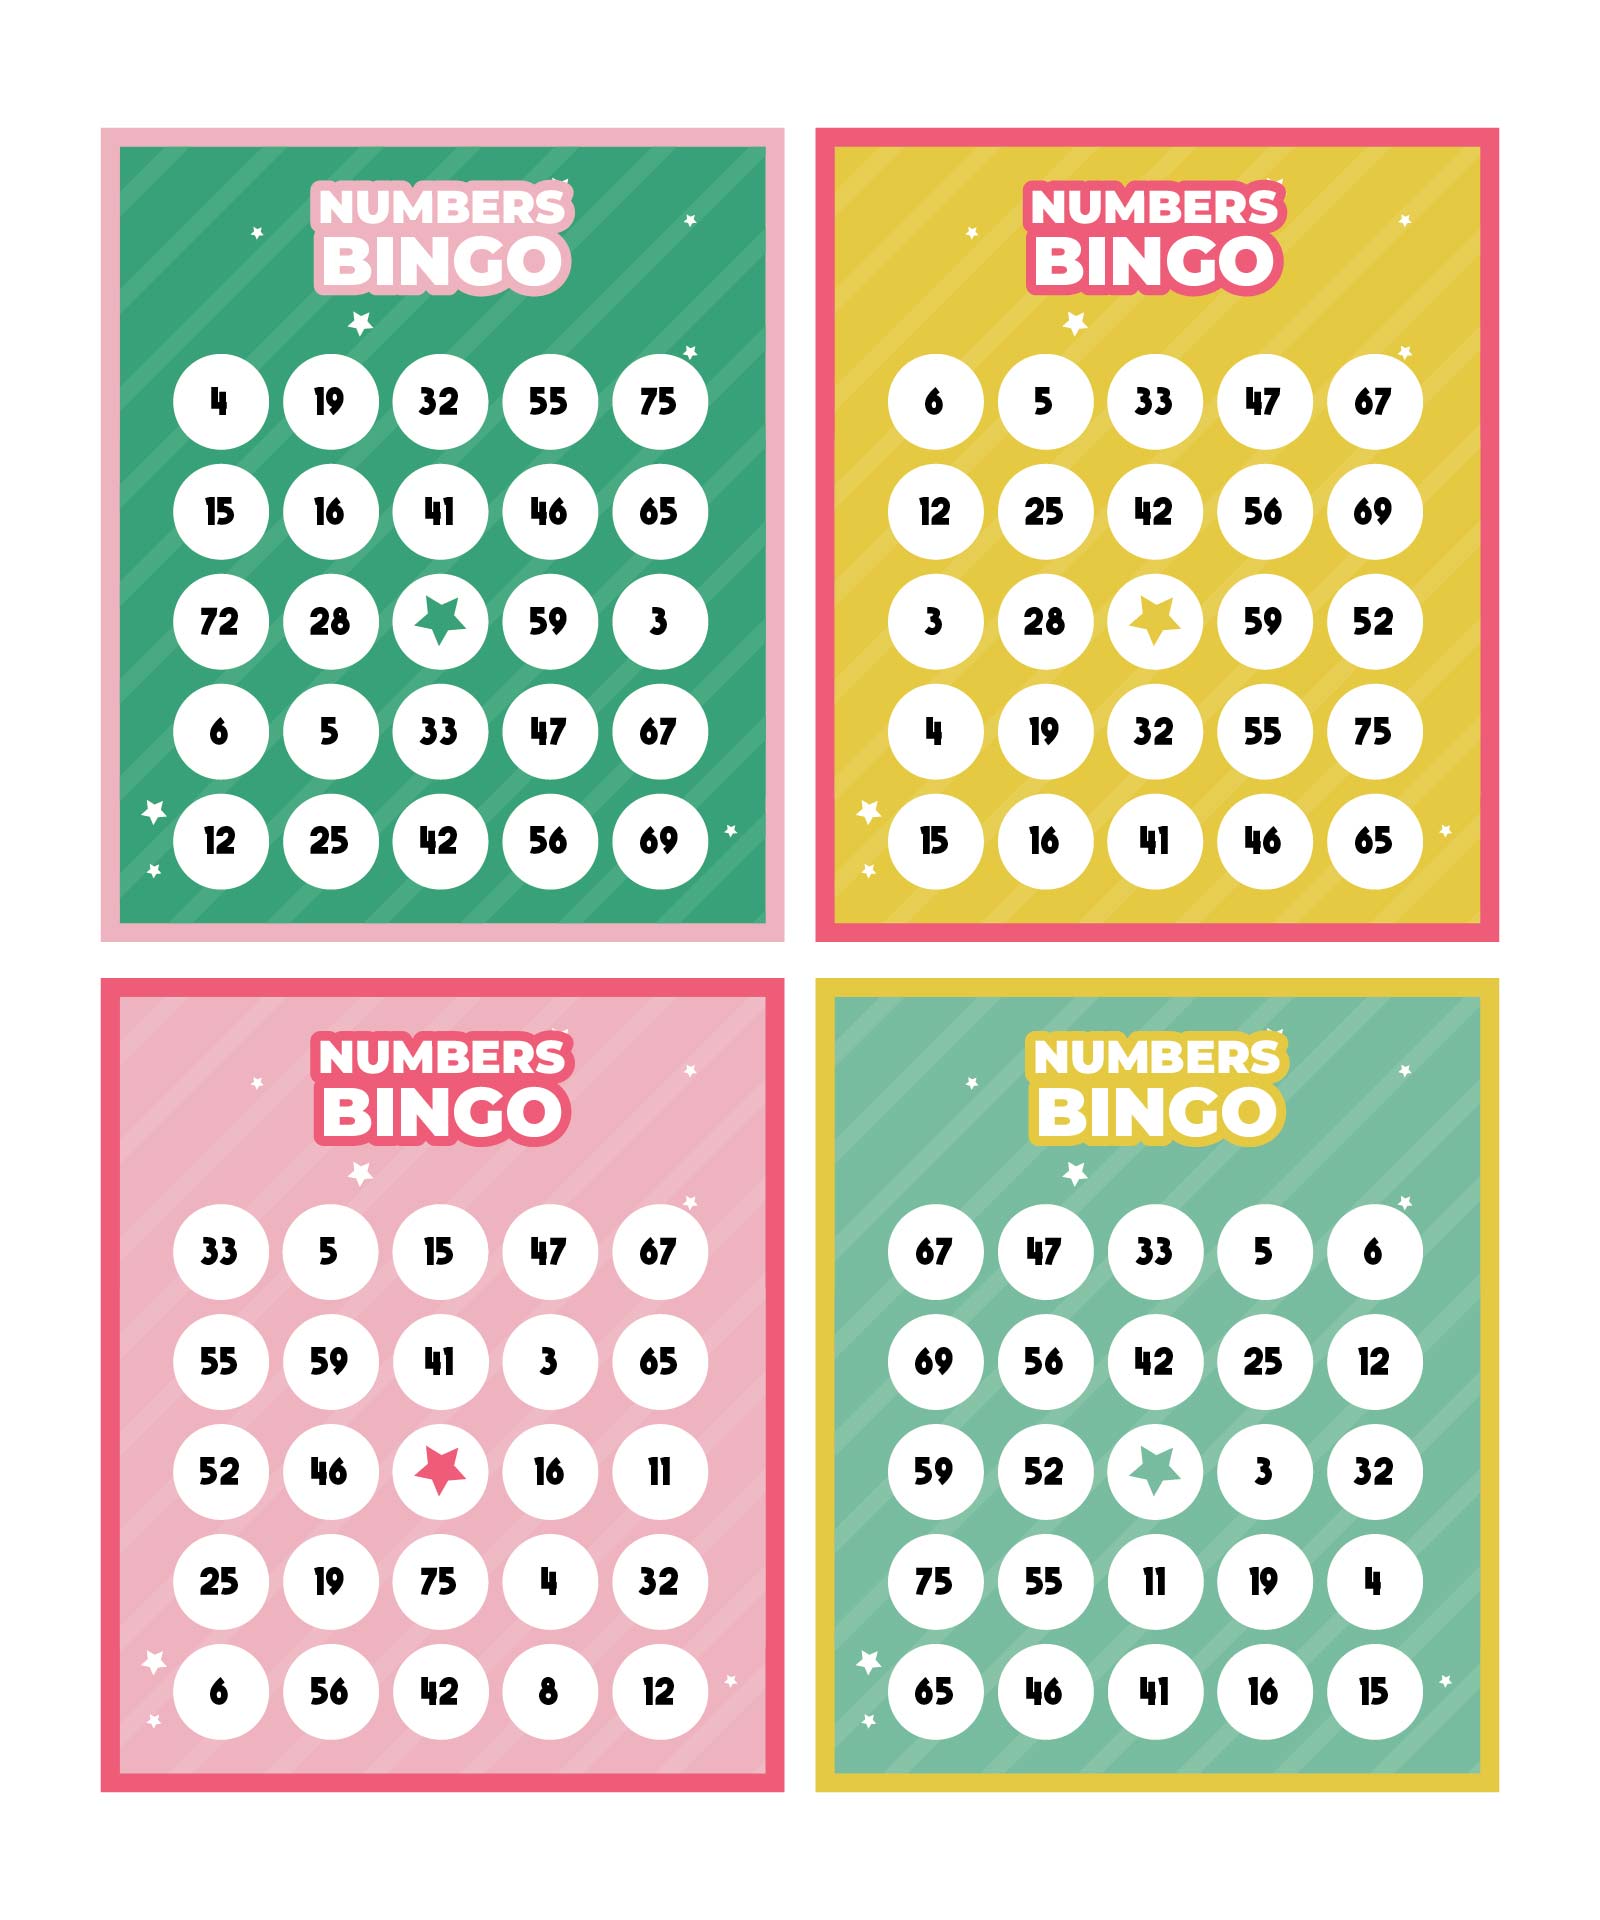 random-bingo-card-how-to-play-bingo-land-based-online-games